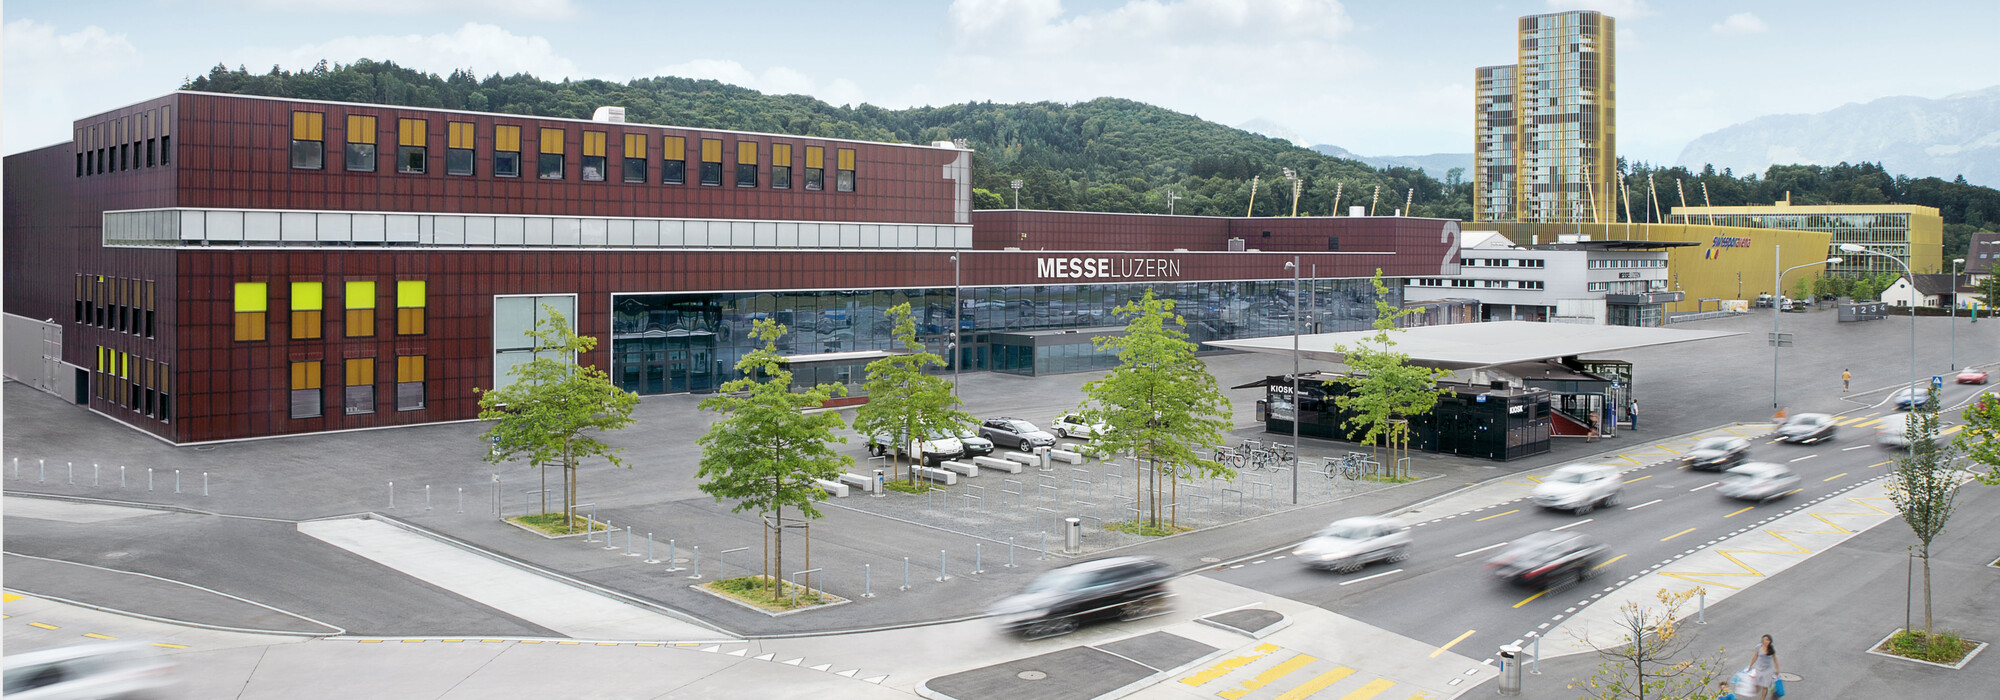 Messe Luzern AG